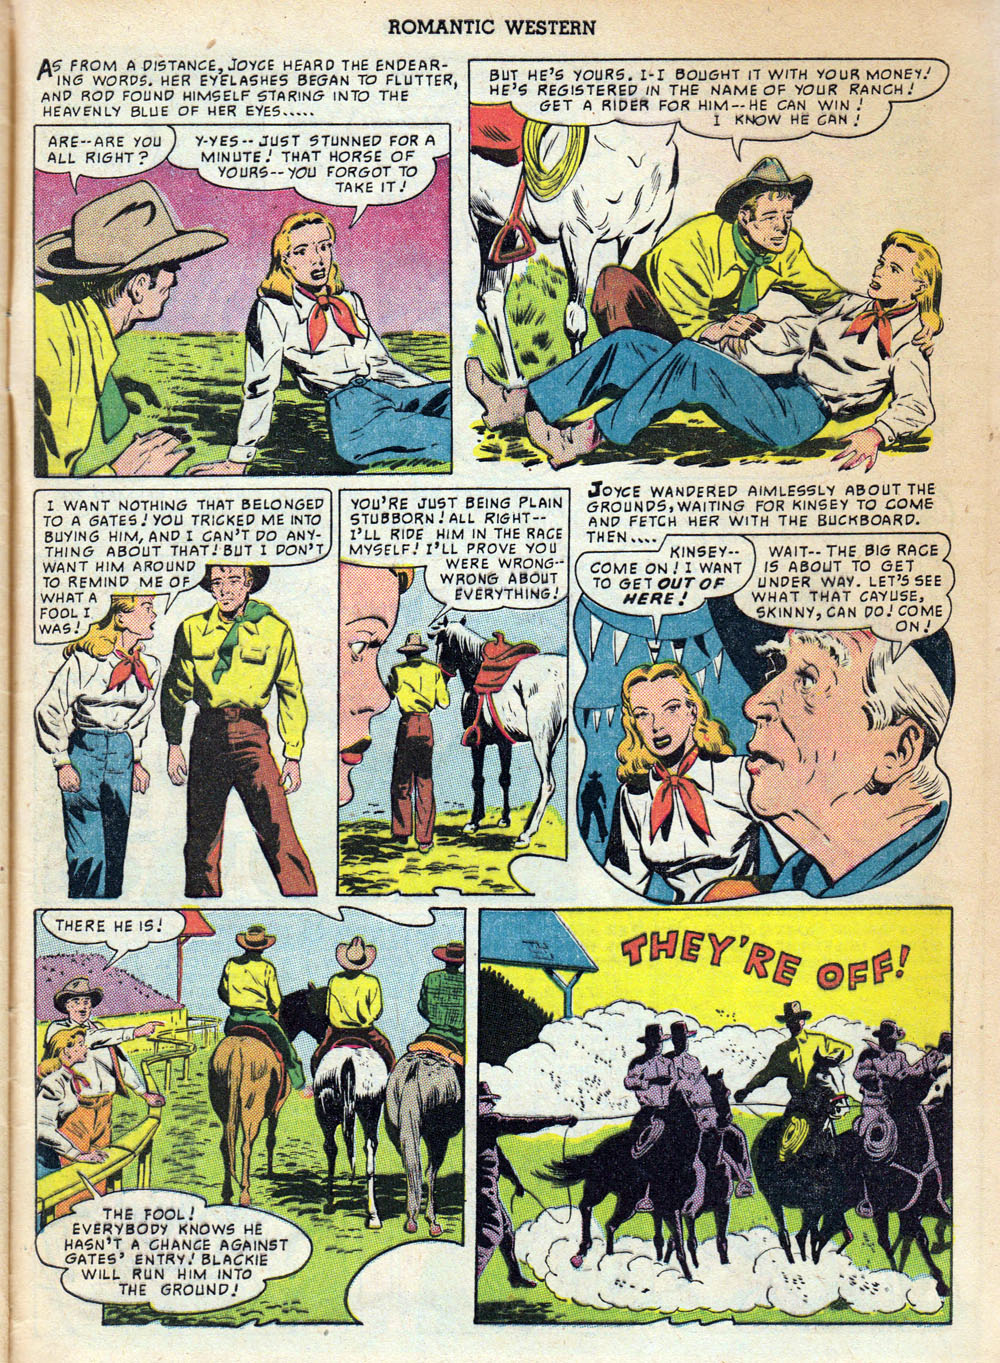 Read online Romantic Western comic -  Issue #2 - 33